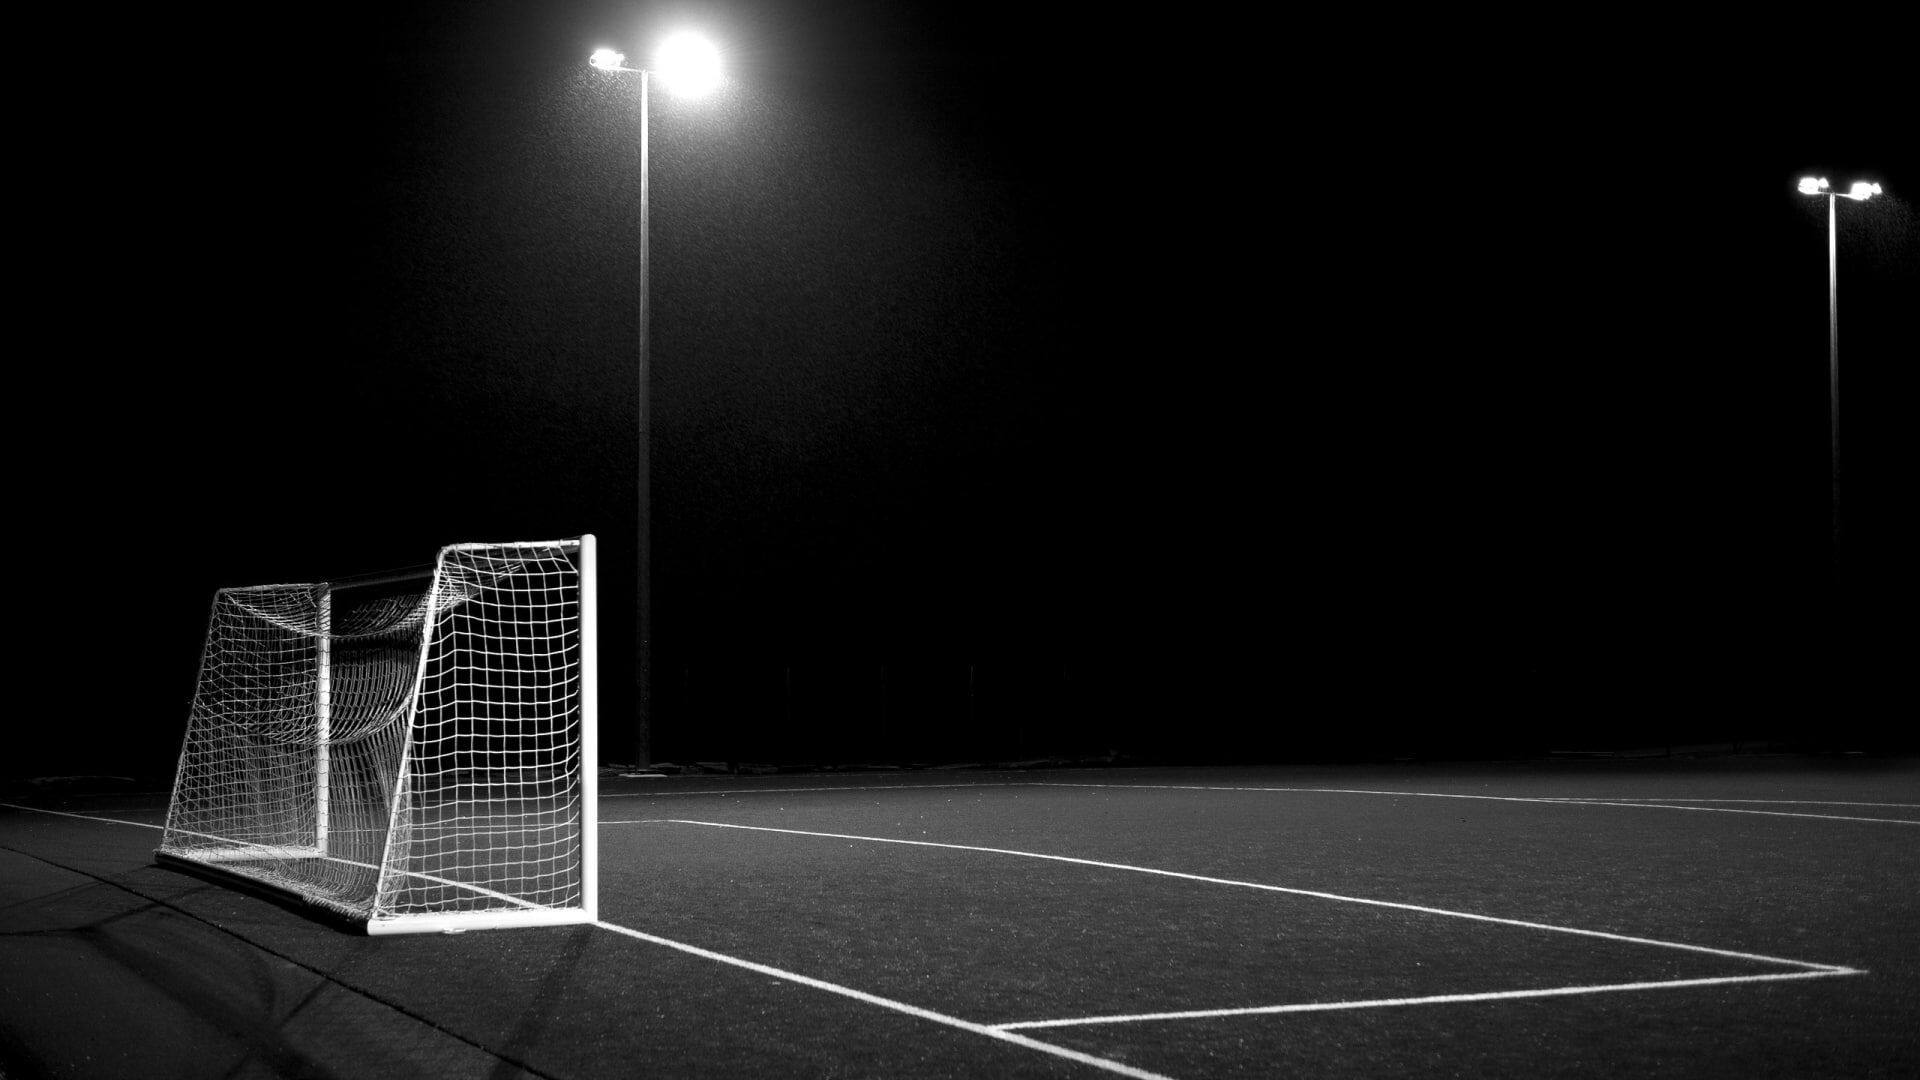 Goal (Sports): Football field at night, Monochrome, Full size soccer goal posts, Ball game. 1920x1080 Full HD Wallpaper.